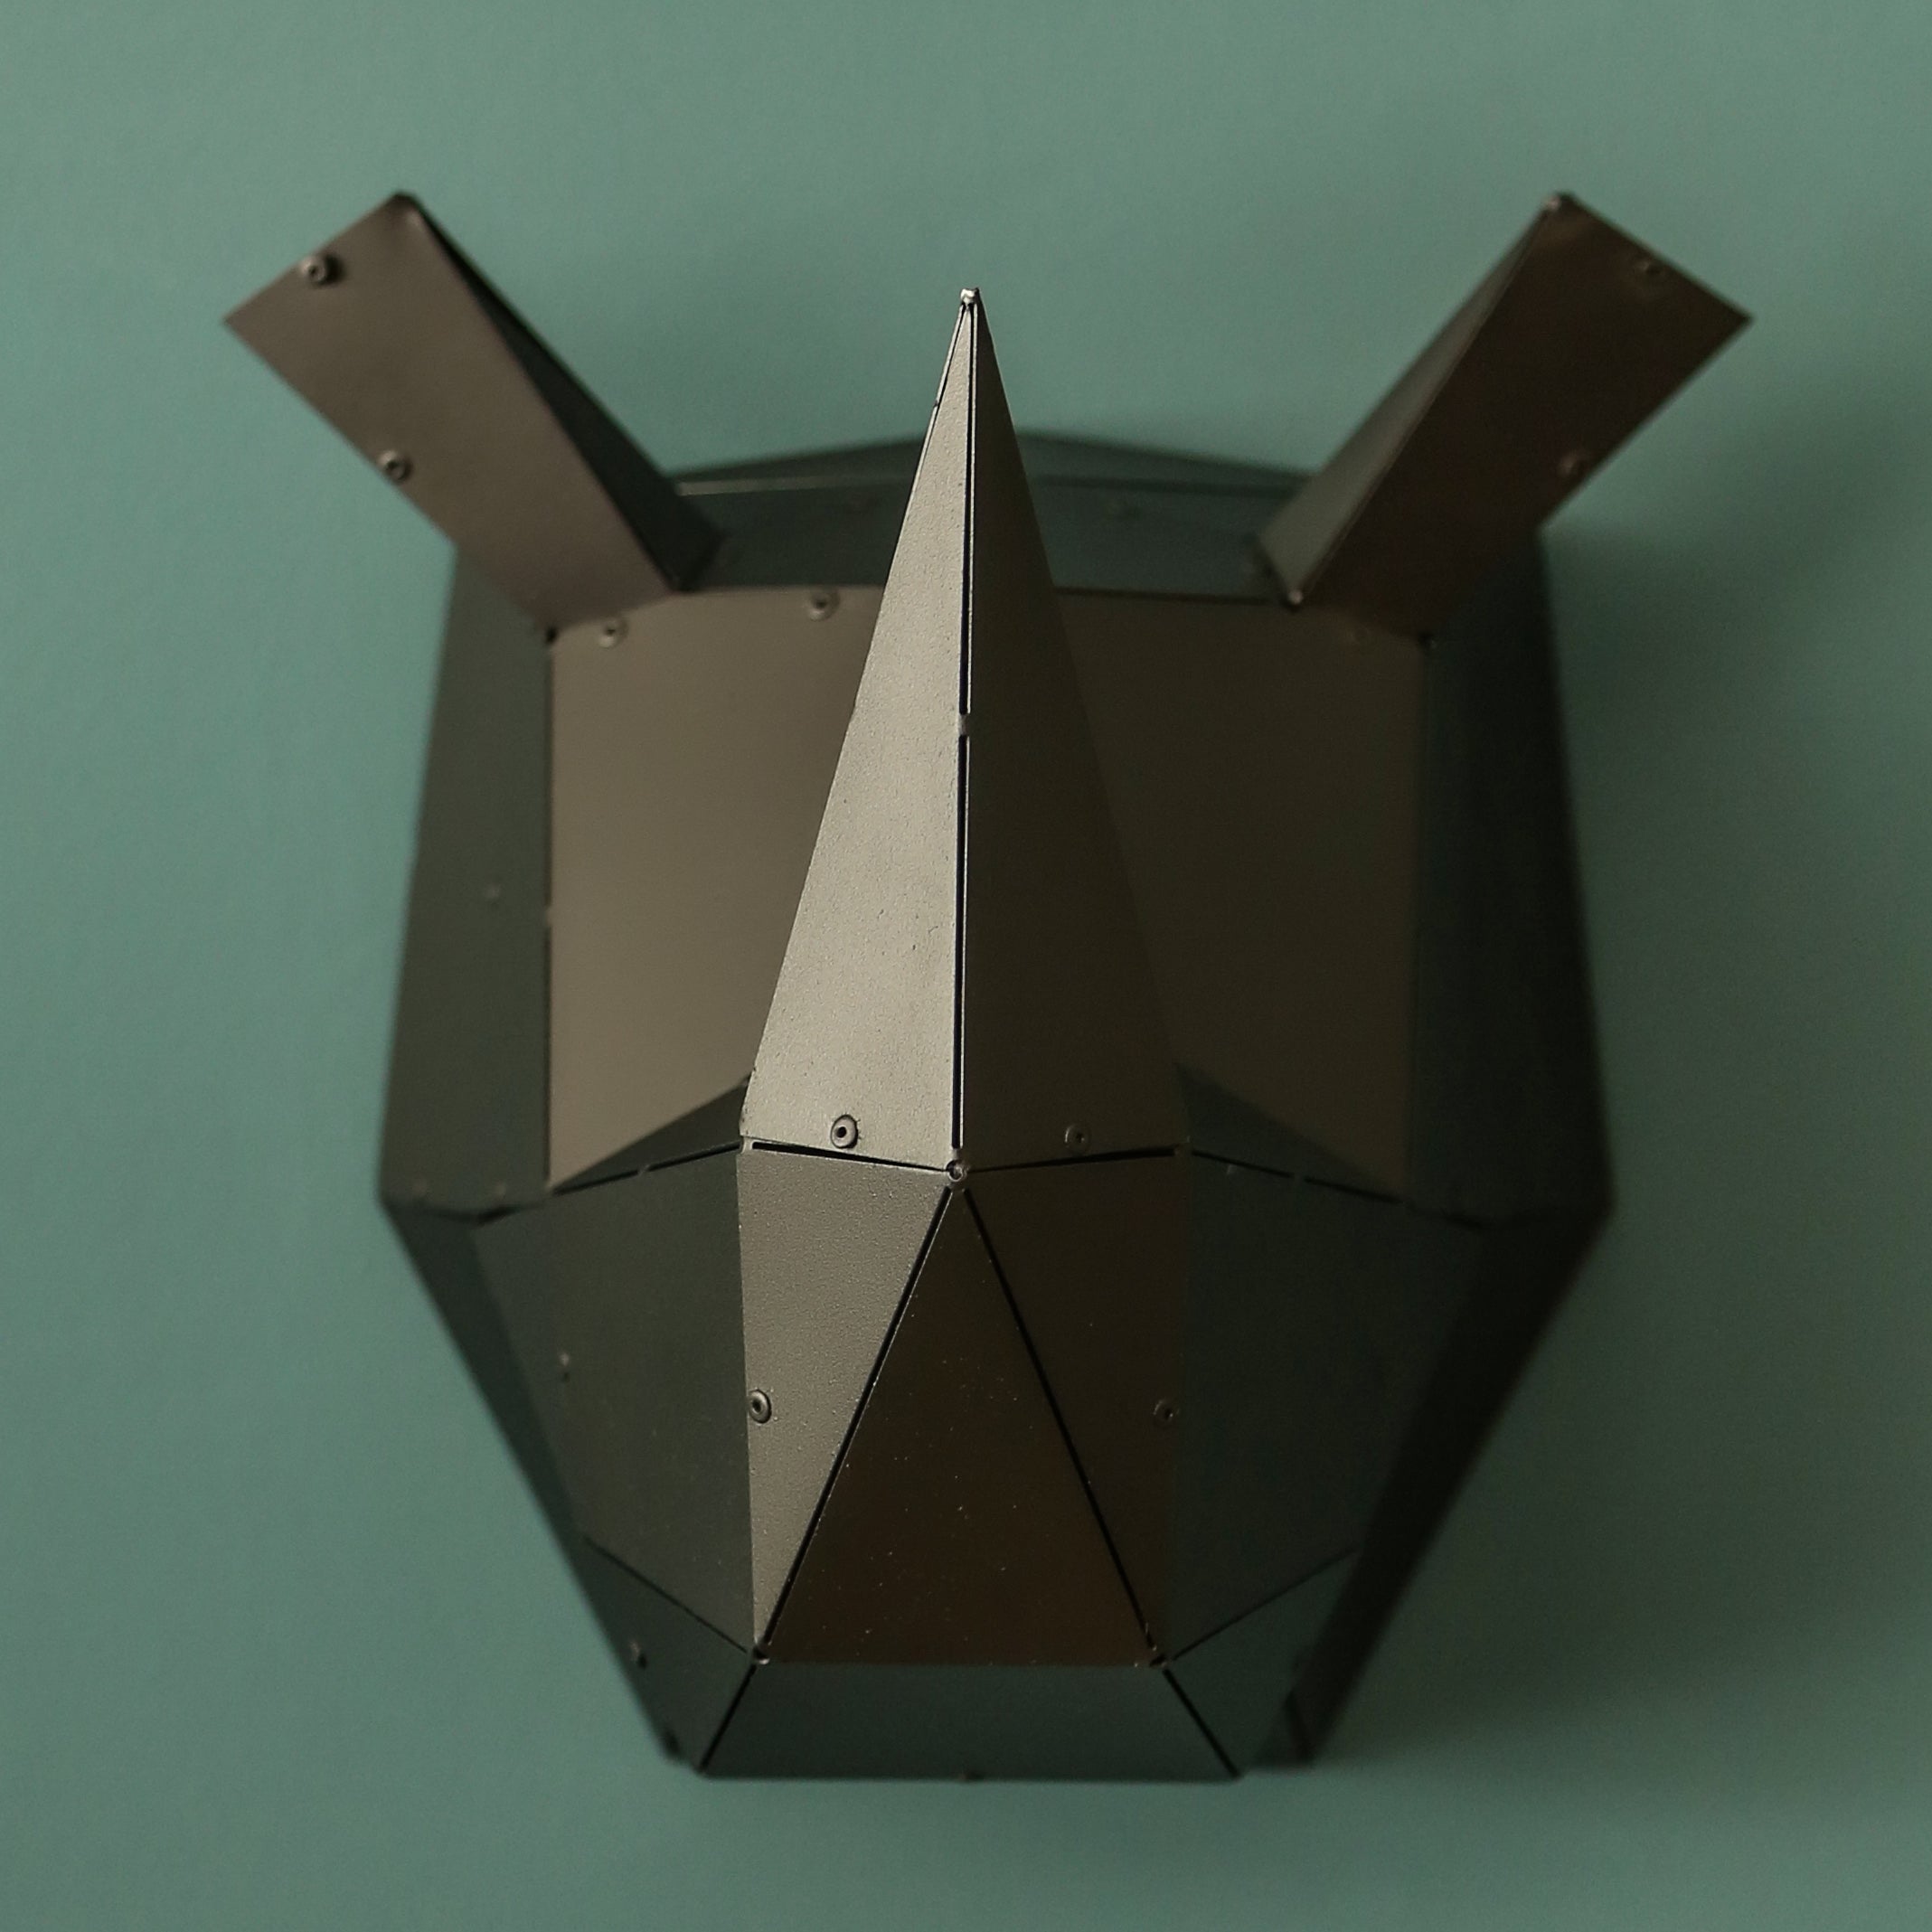 3D Geometric Wall Art of Rhino